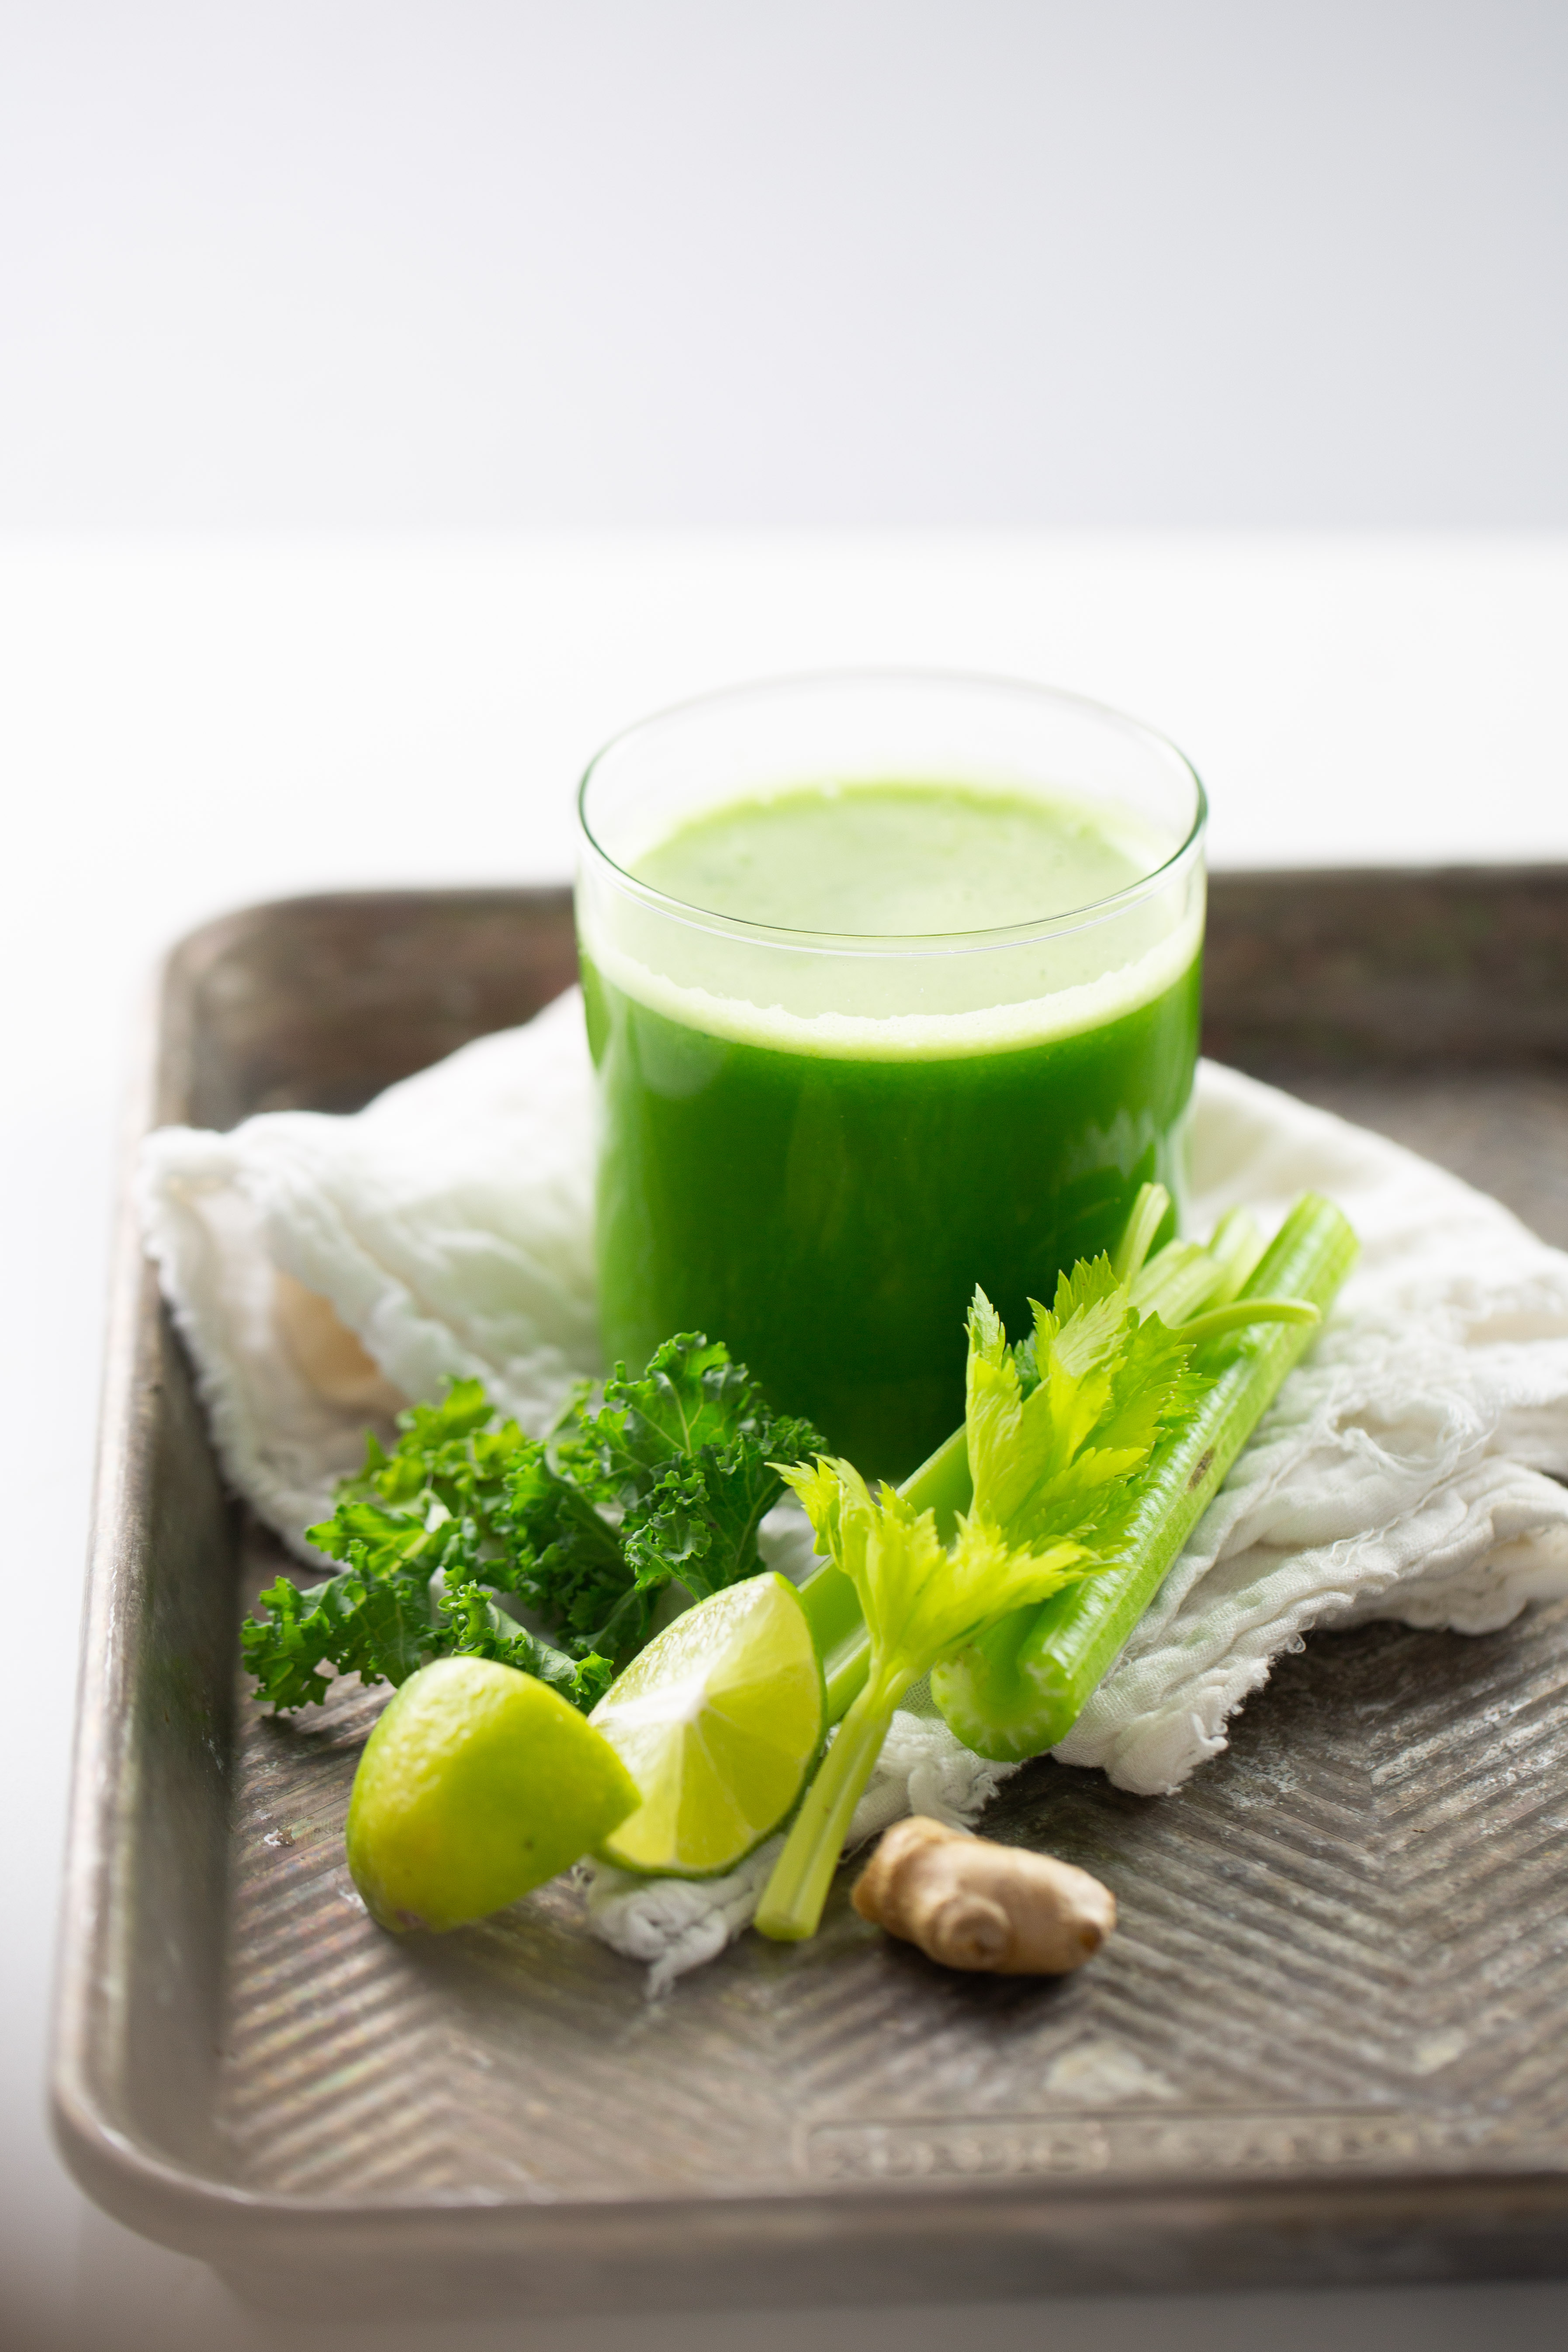 Tasty green juice